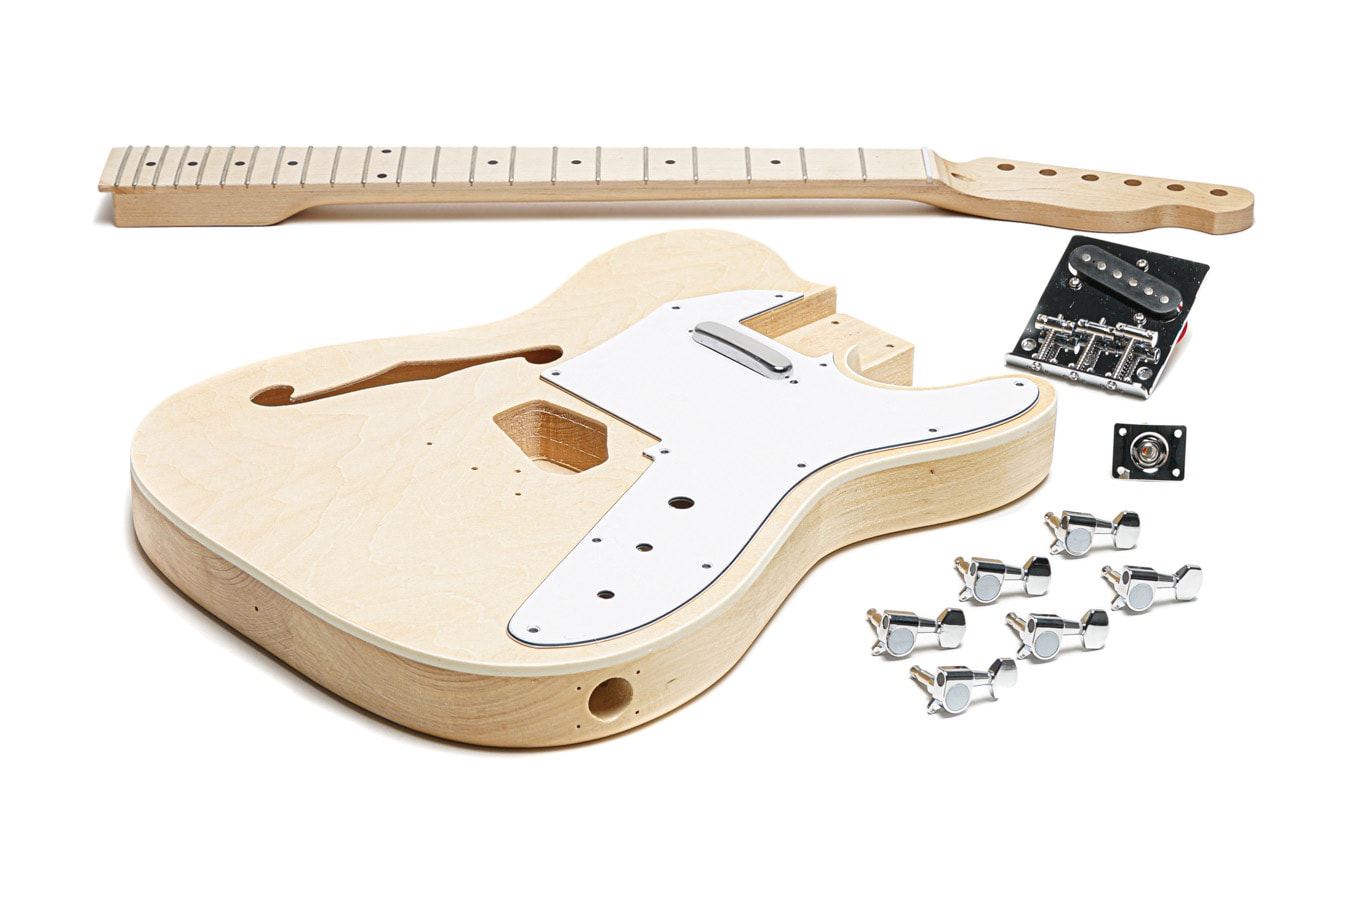 Tru Oil Paint Set Guitar Kit to Highlight Veneer Body